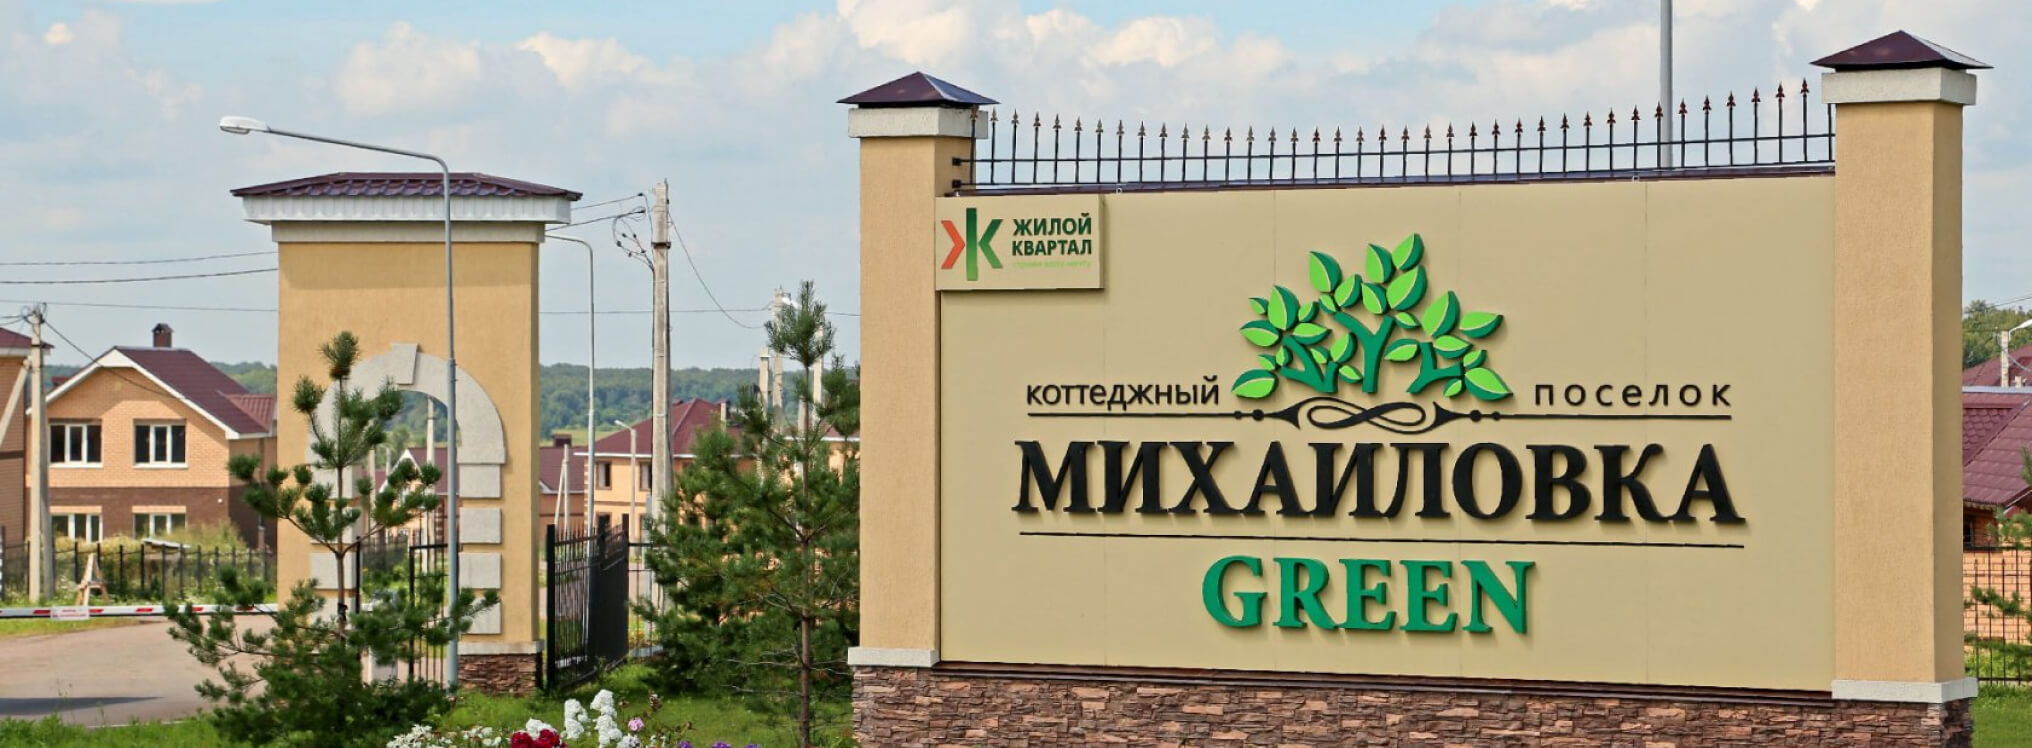 Михайловка Green 2